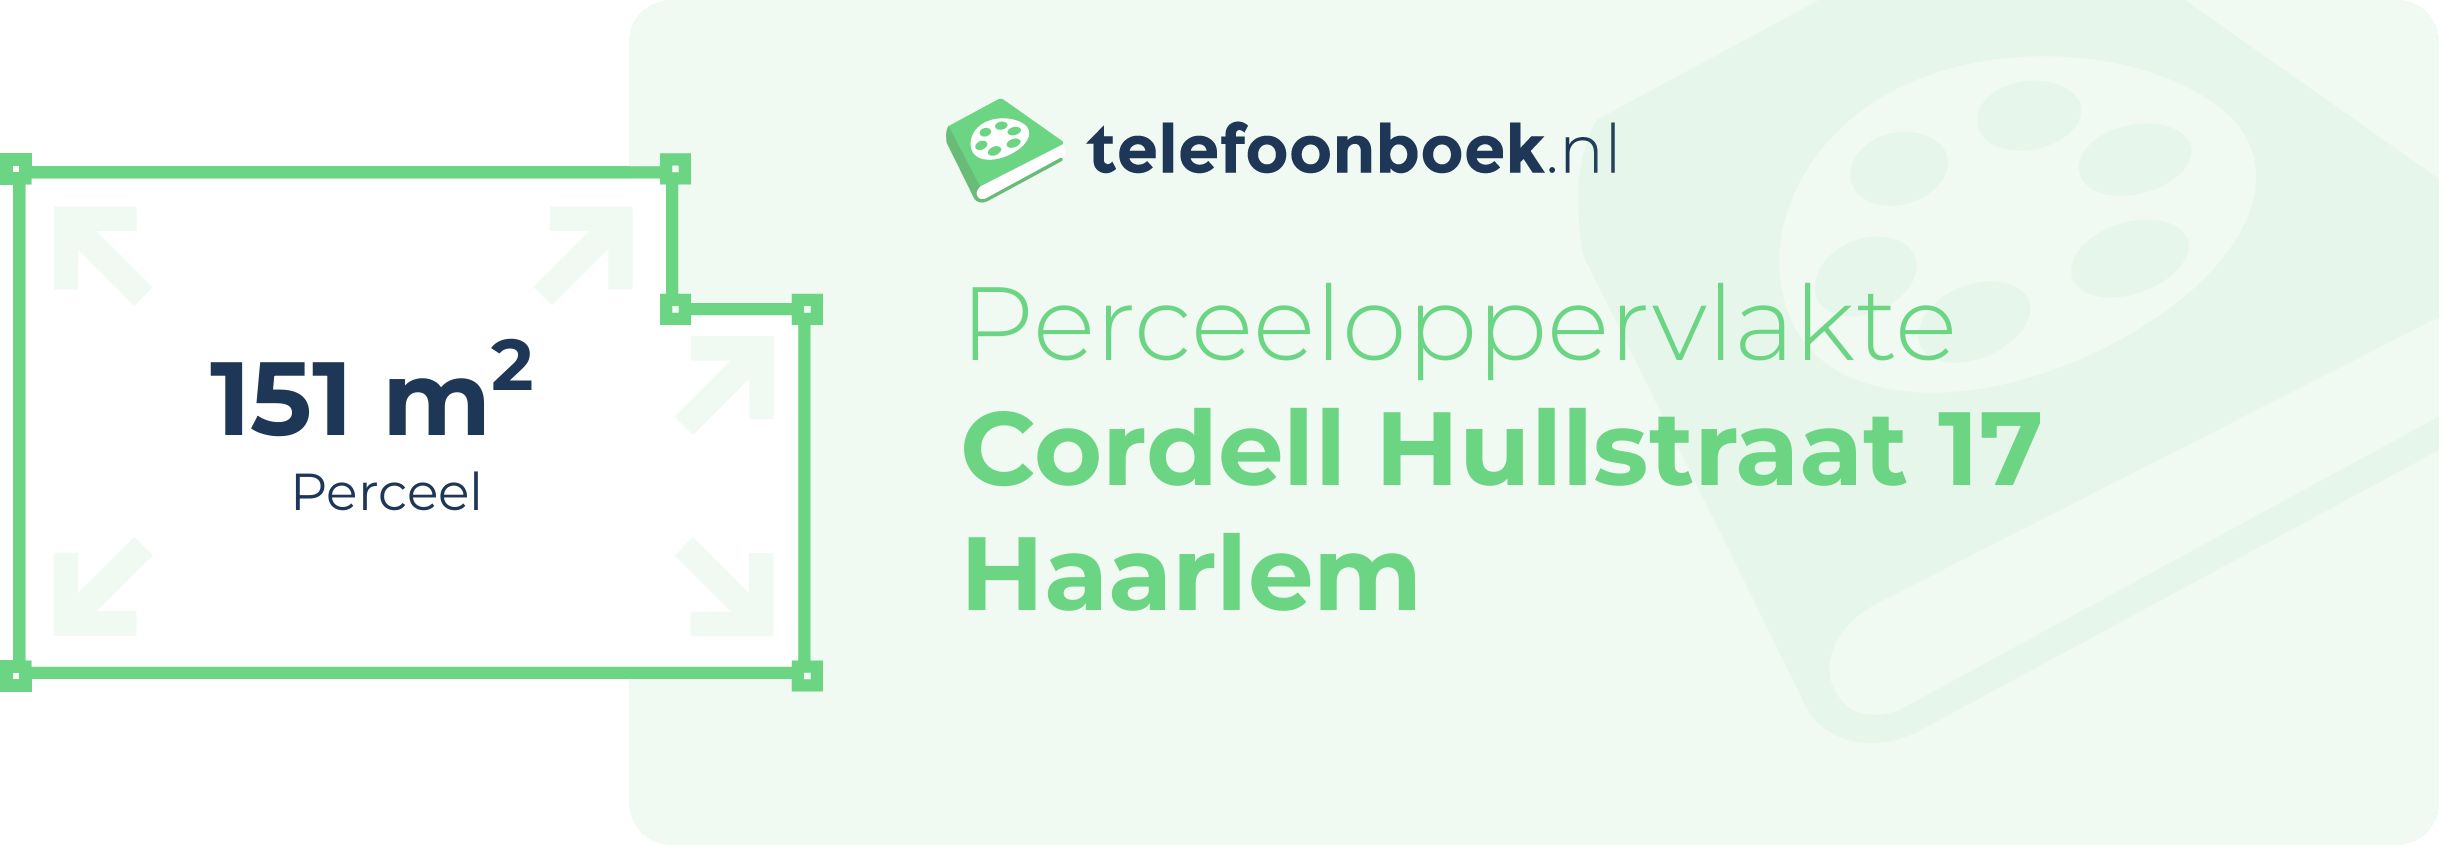 Perceeloppervlakte Cordell Hullstraat 17 Haarlem